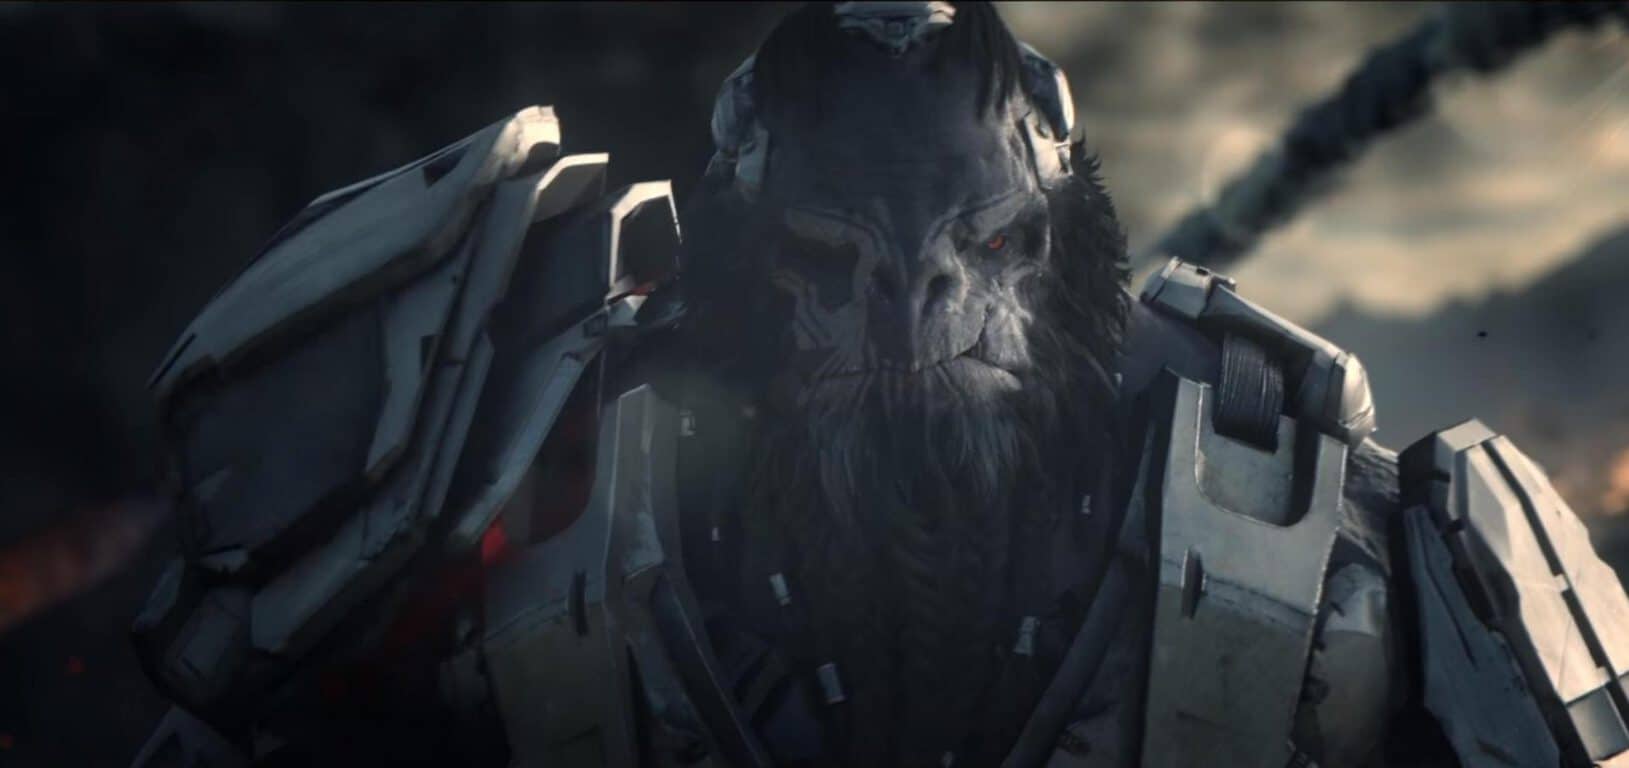 E3 2016: Microsoft officially announces Halo Wars 2 - OnMSFT.com - June 13, 2016